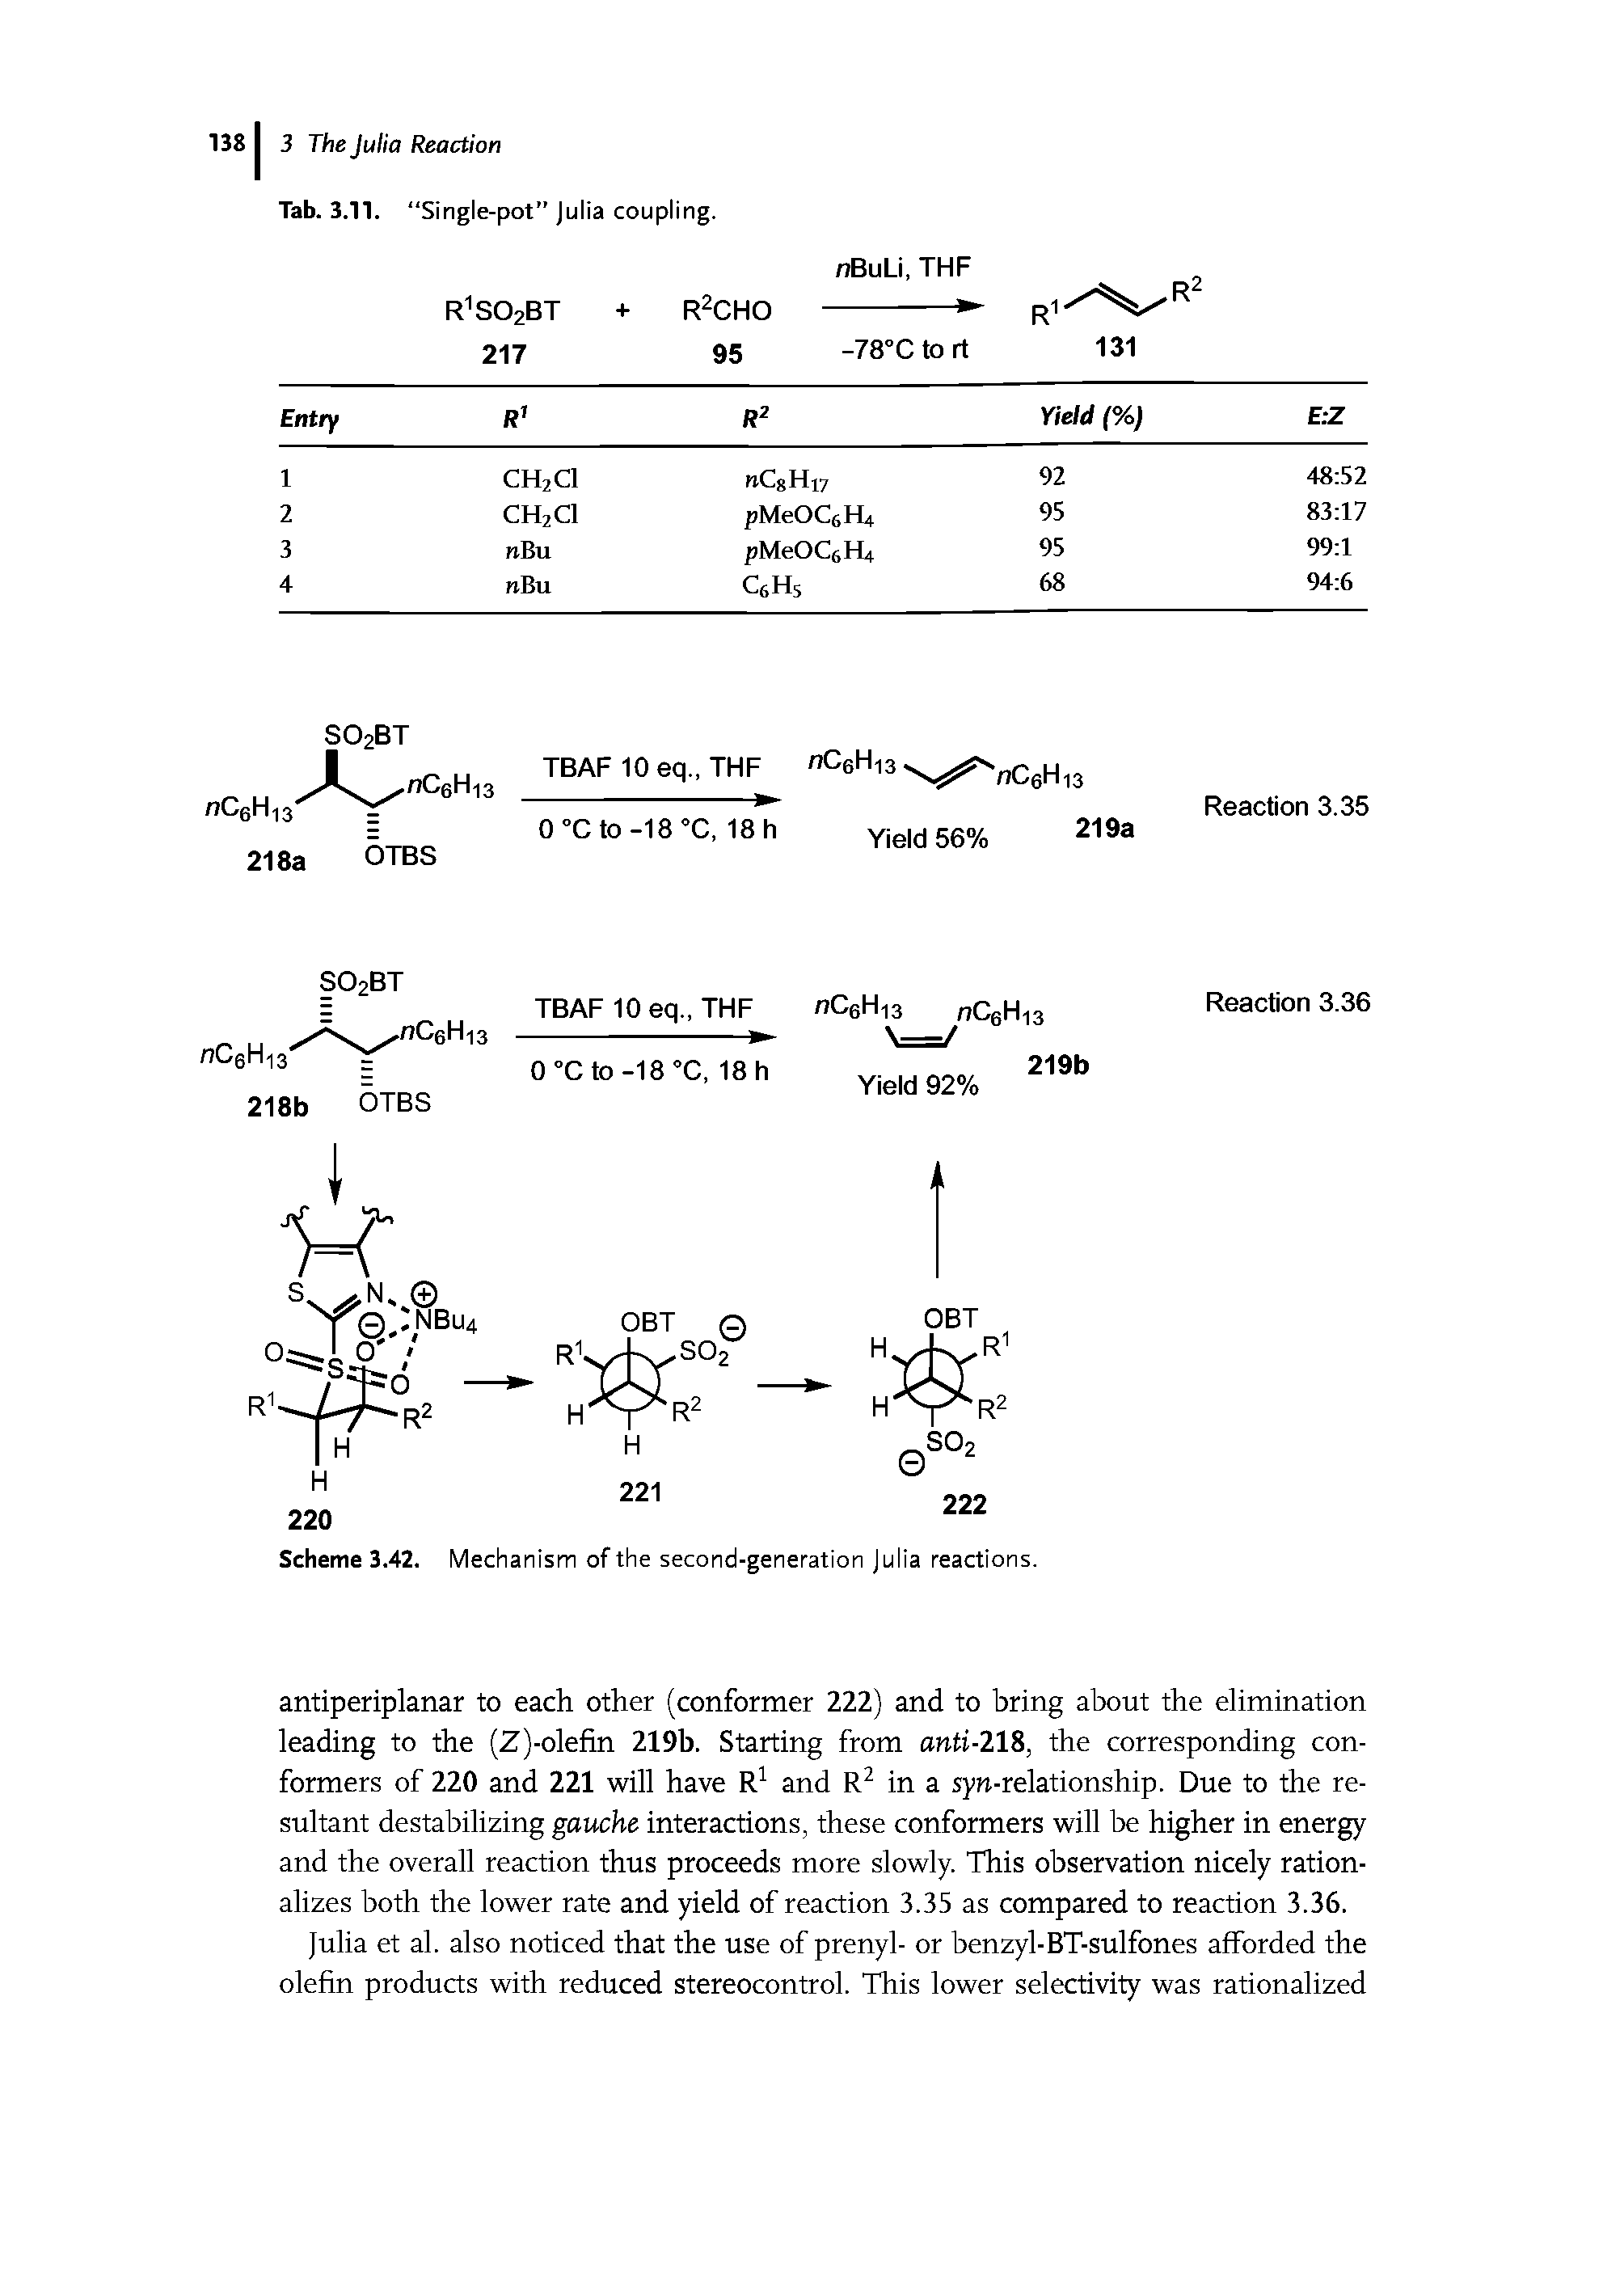 Scheme 3.42. Mechanism of the second-generation Julia reactions.